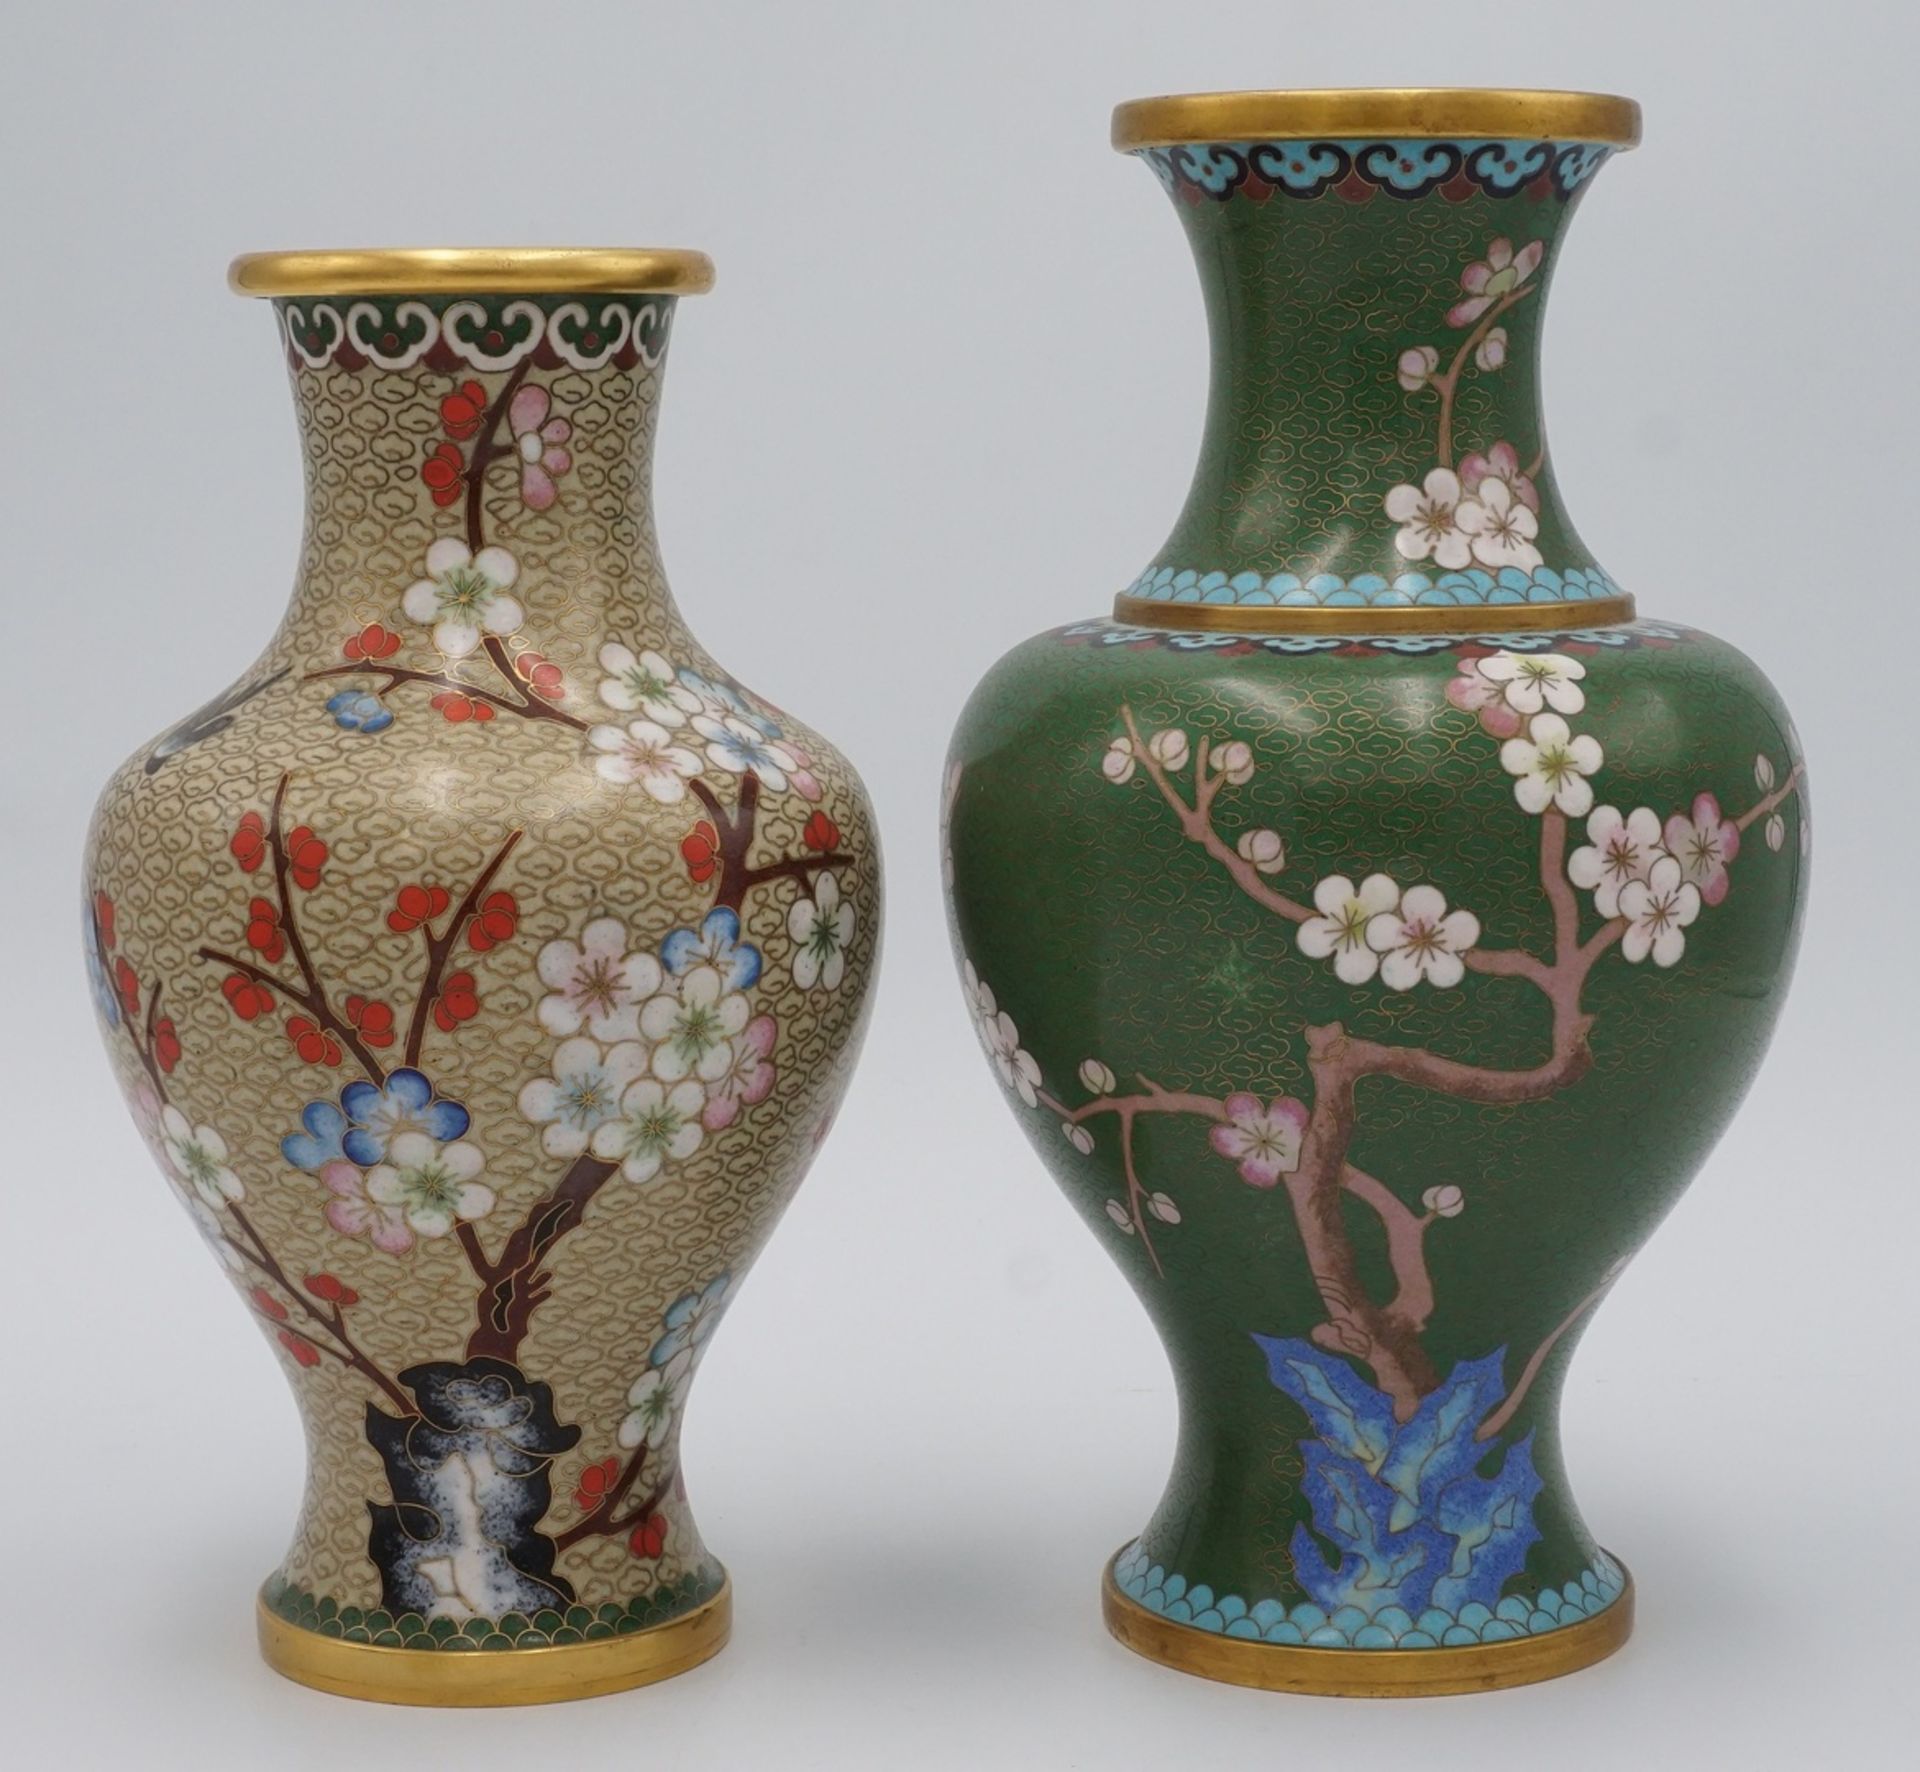 Zwei Cloisonné Vasen, China, 20. Jh.Messing mit Emailledekor, balusterförmiger Korpus, guter